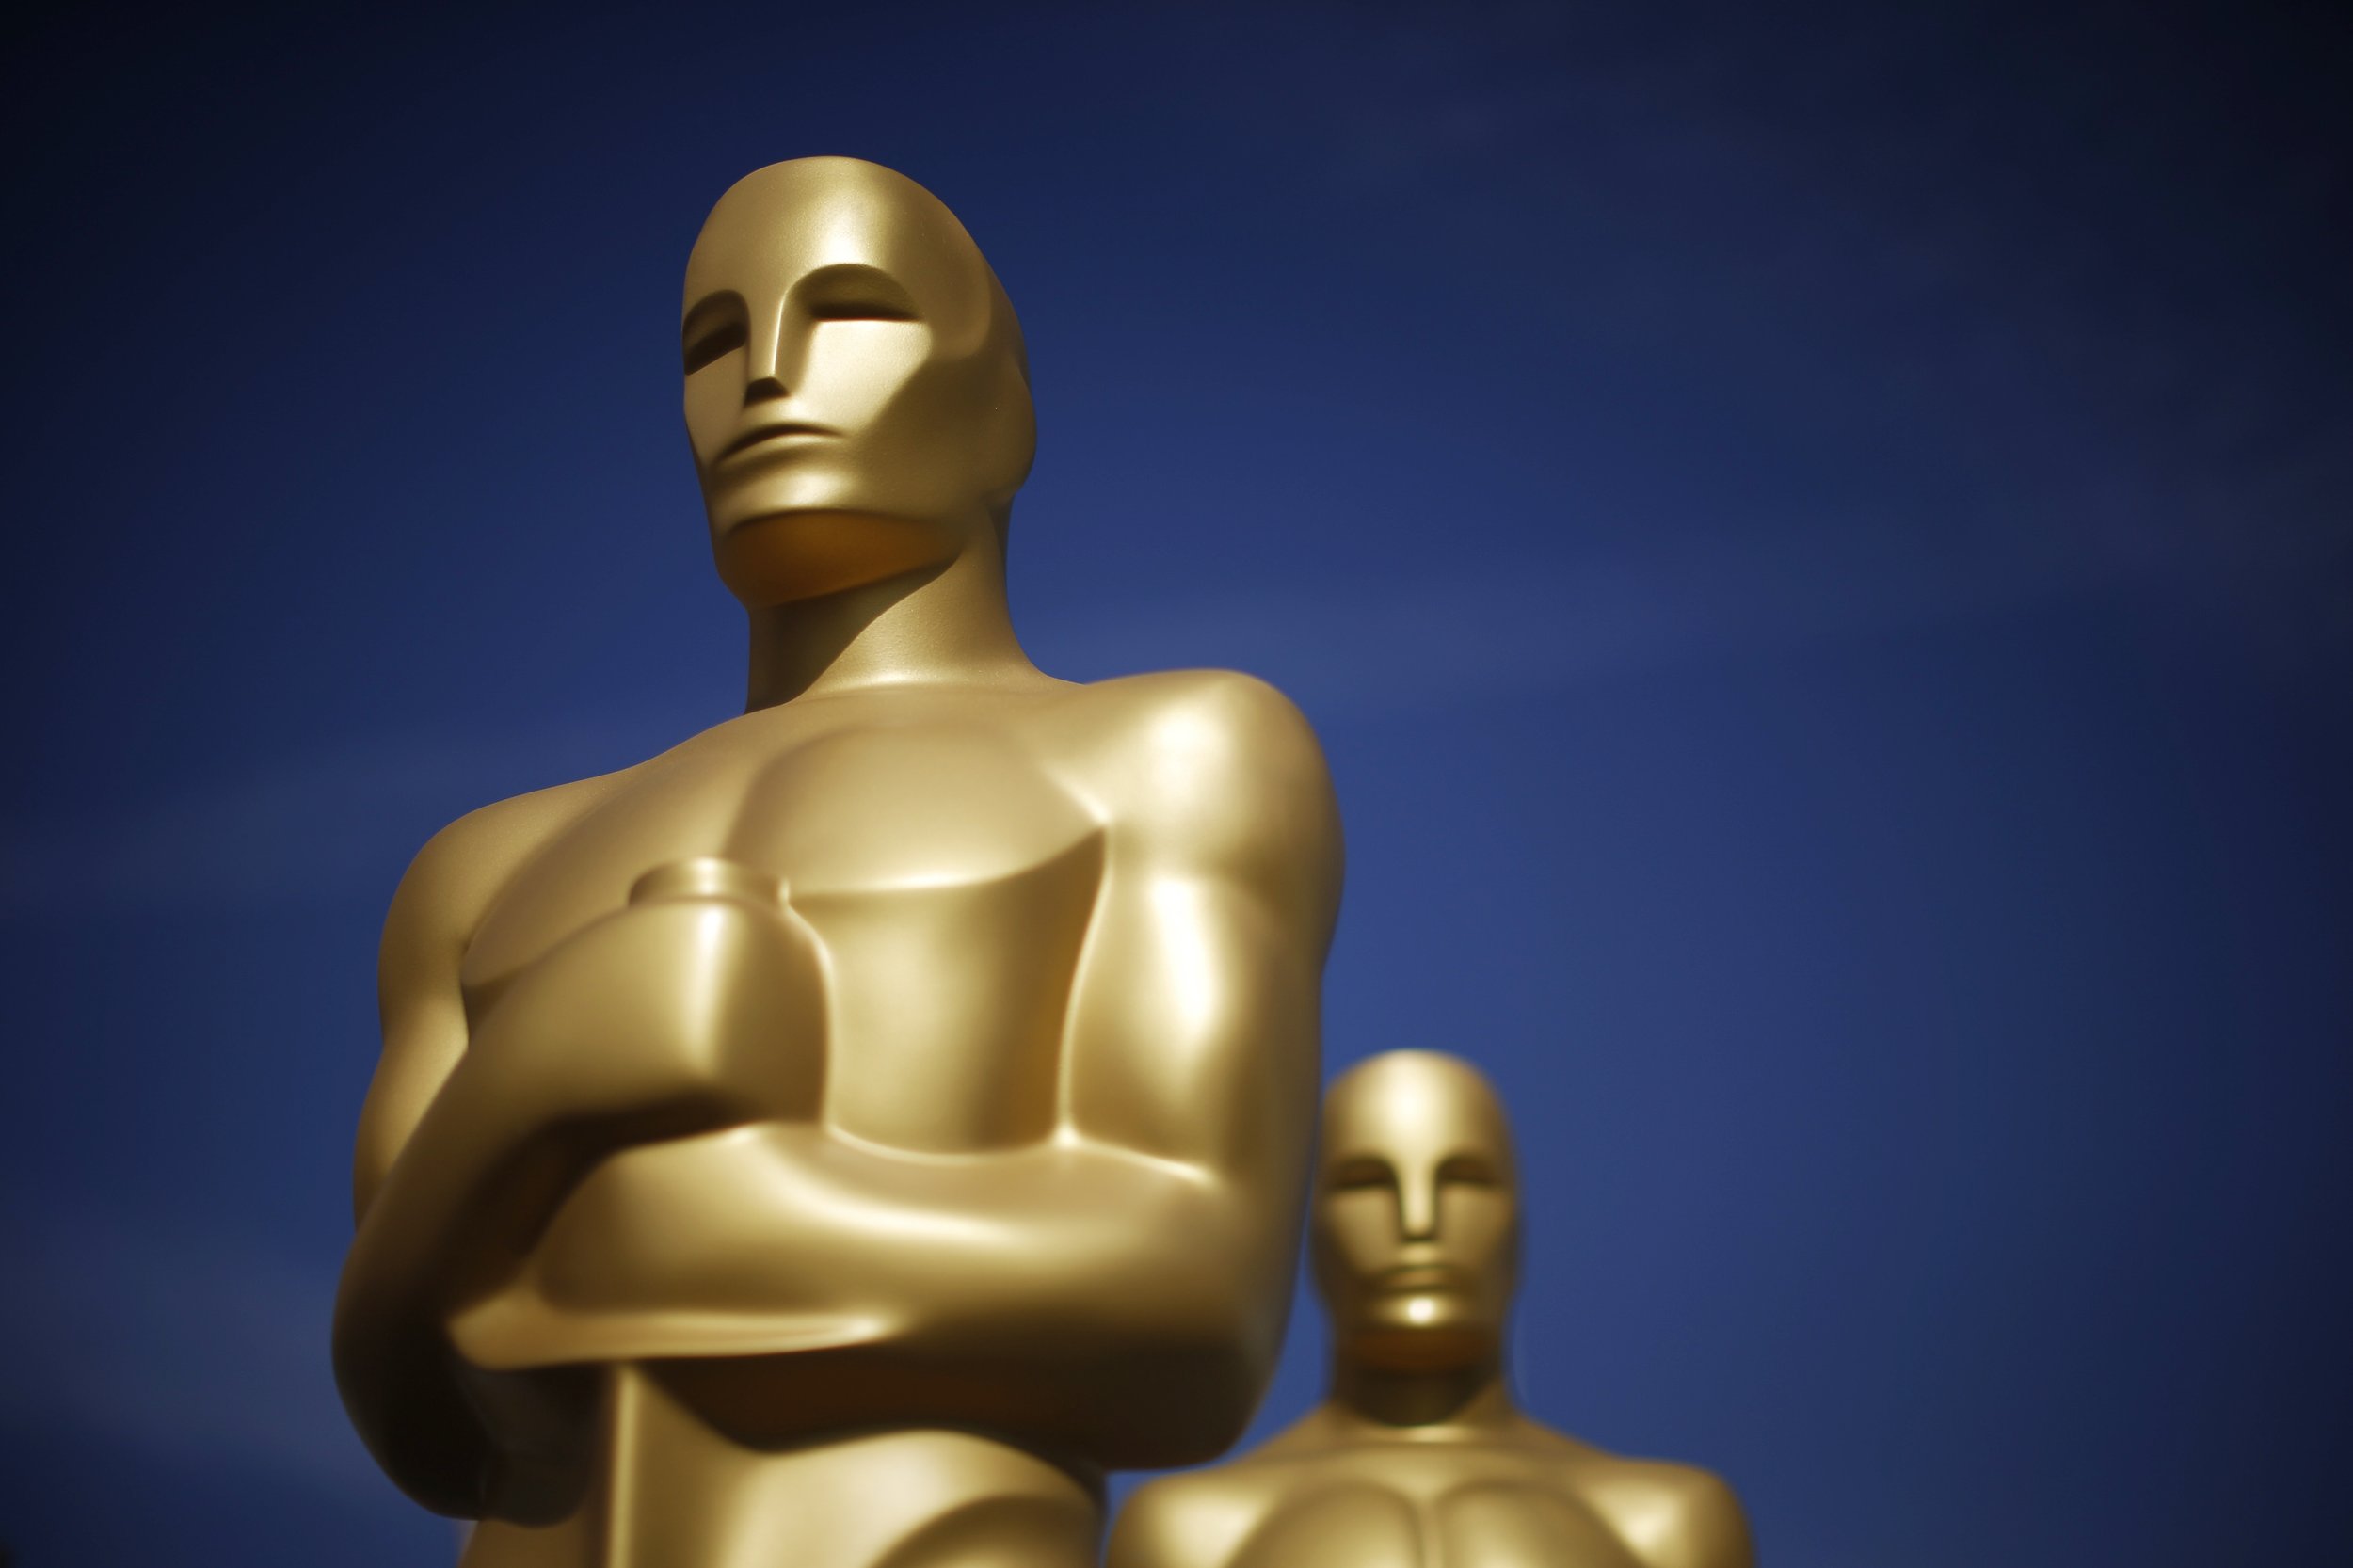 How To Throw An Oscar Party Celebrate 2015 Academy Awards With Fun